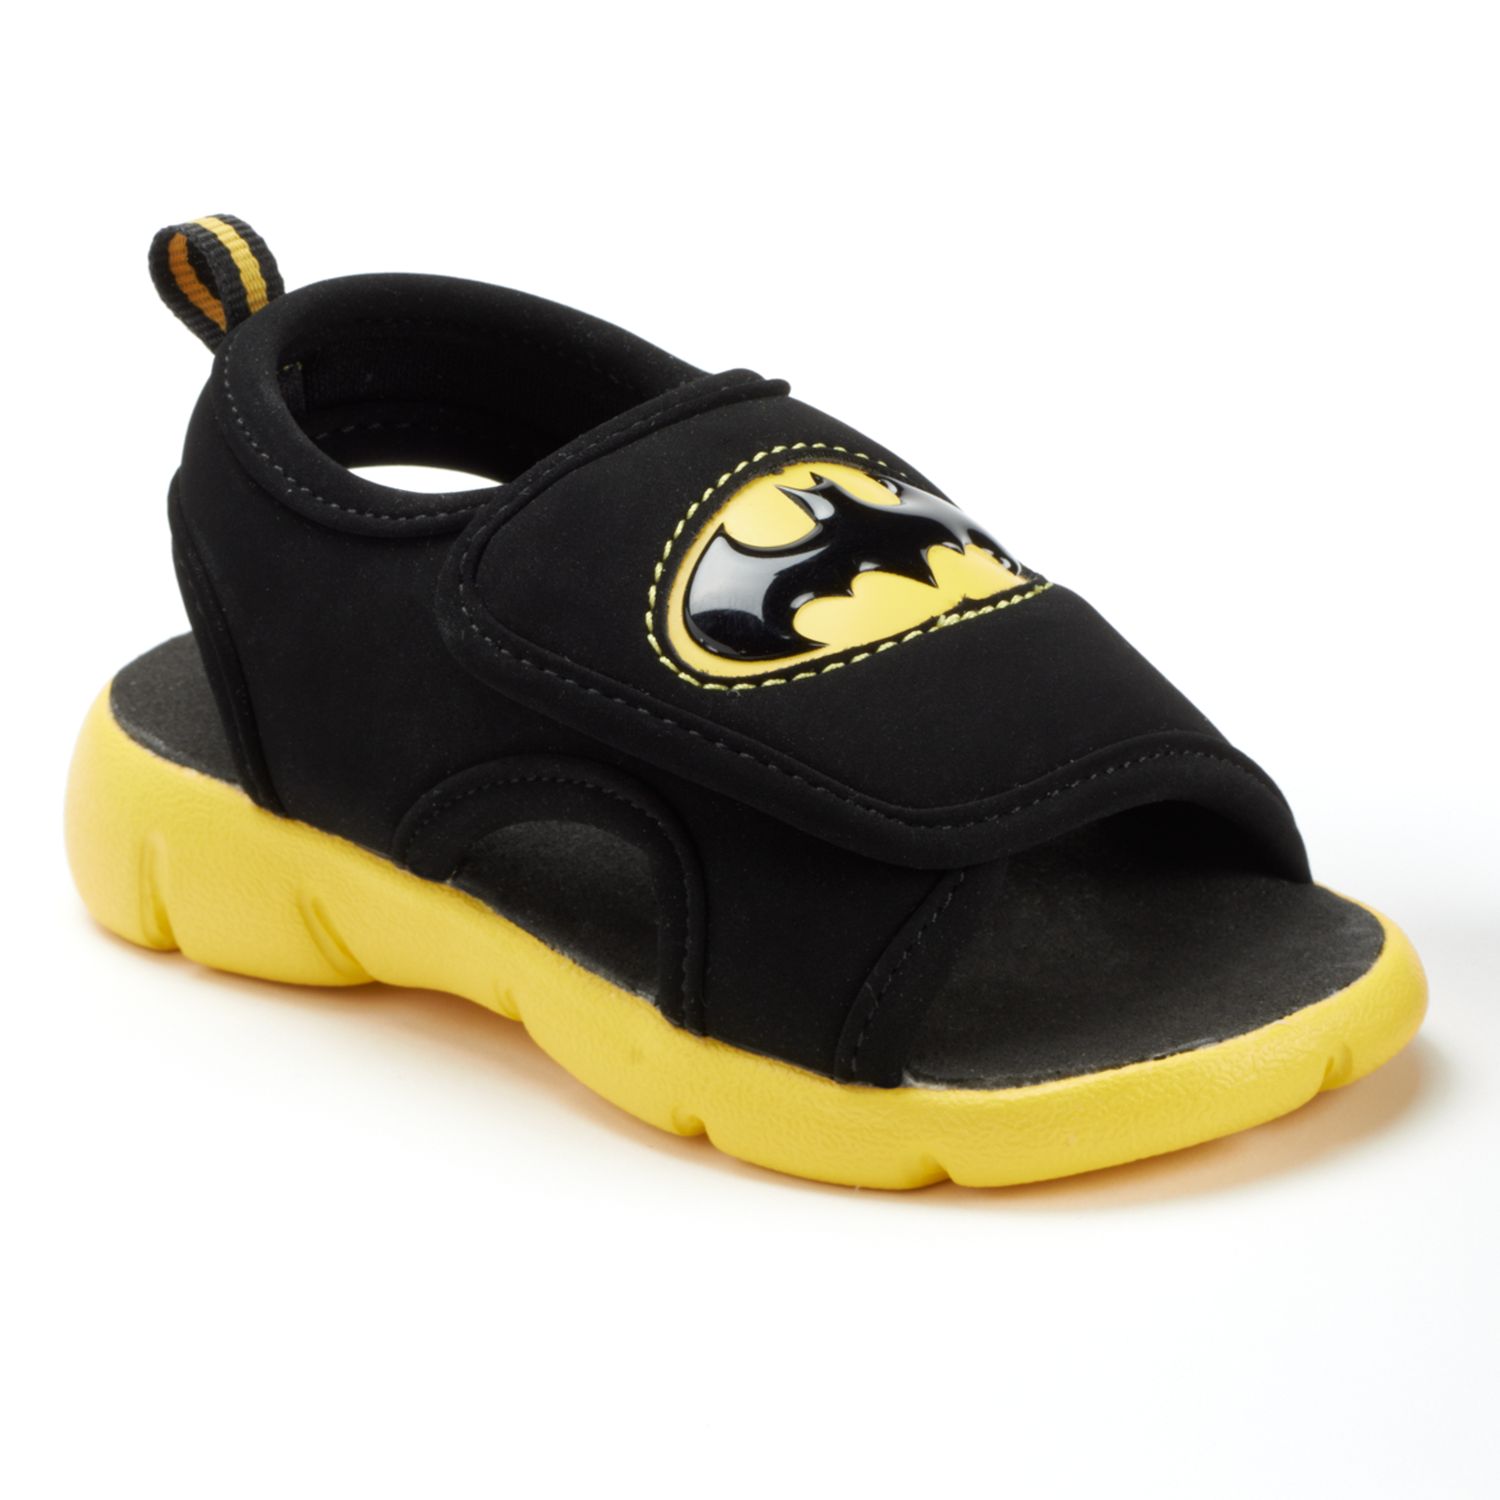 Batman Toddler Boys' Sandals